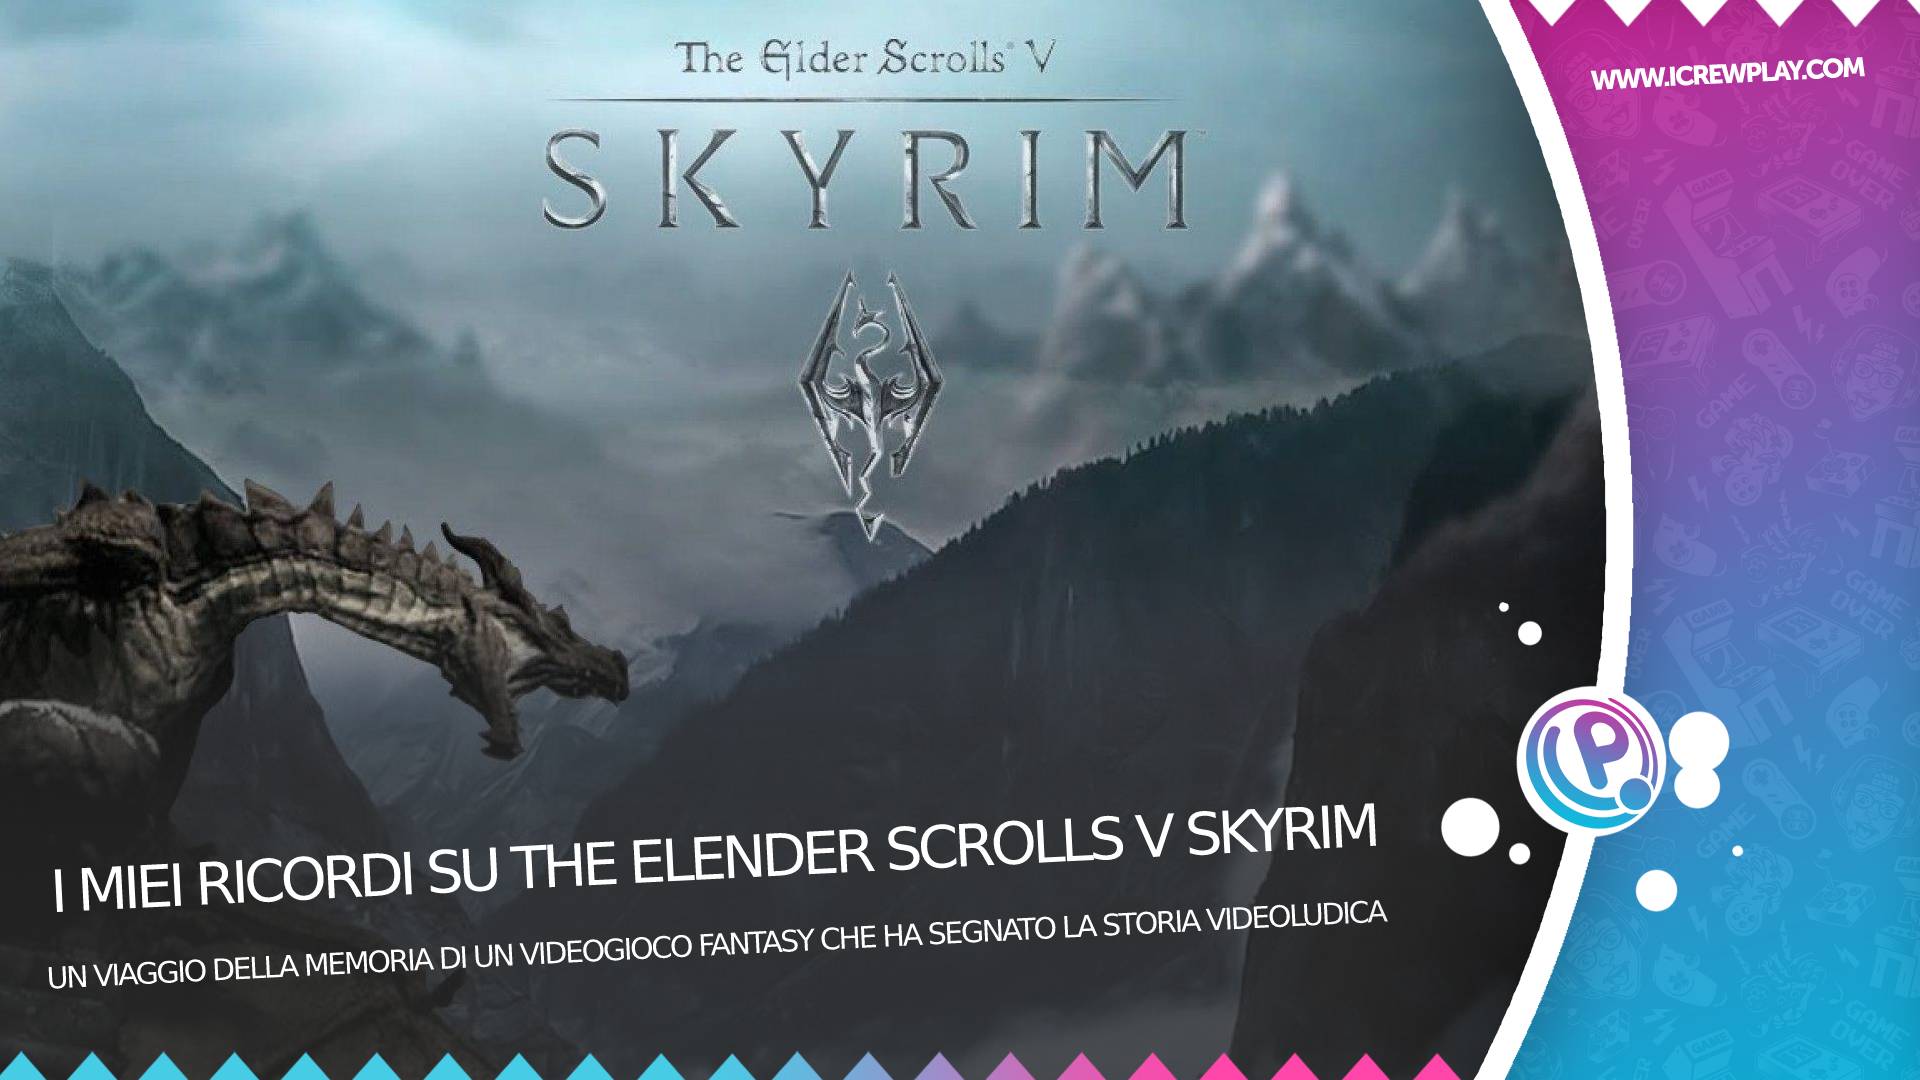 I Miei ricordi su The Elder Scrolls V Skyrim 2